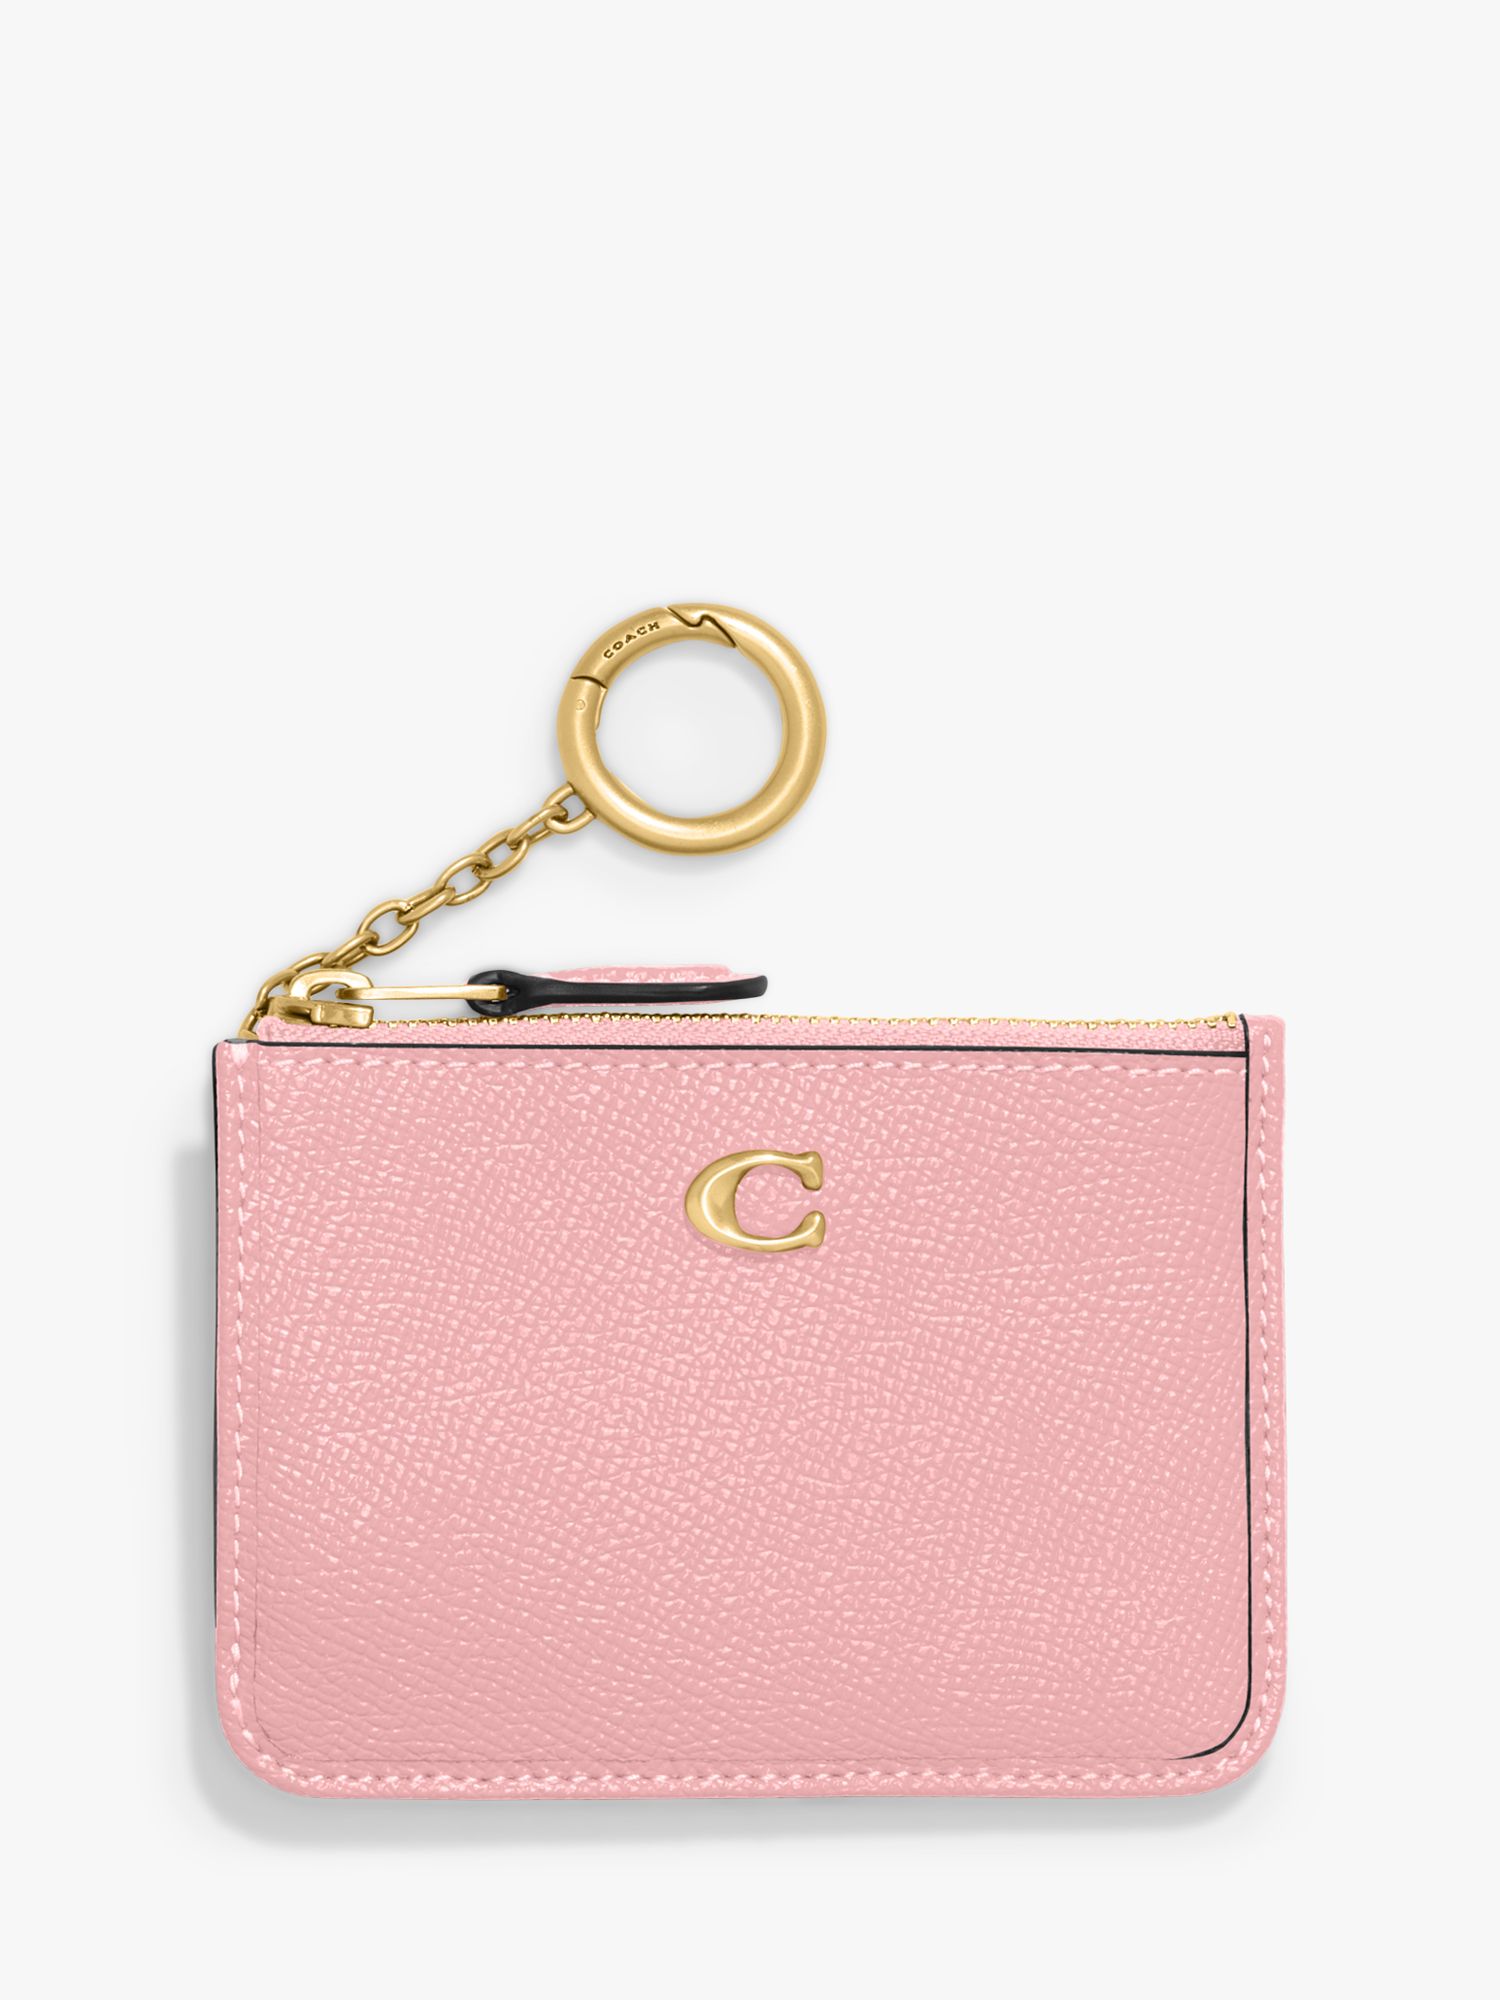 Women's Pink Coach Handbags, Bags & Purses | John Lewis & Partners